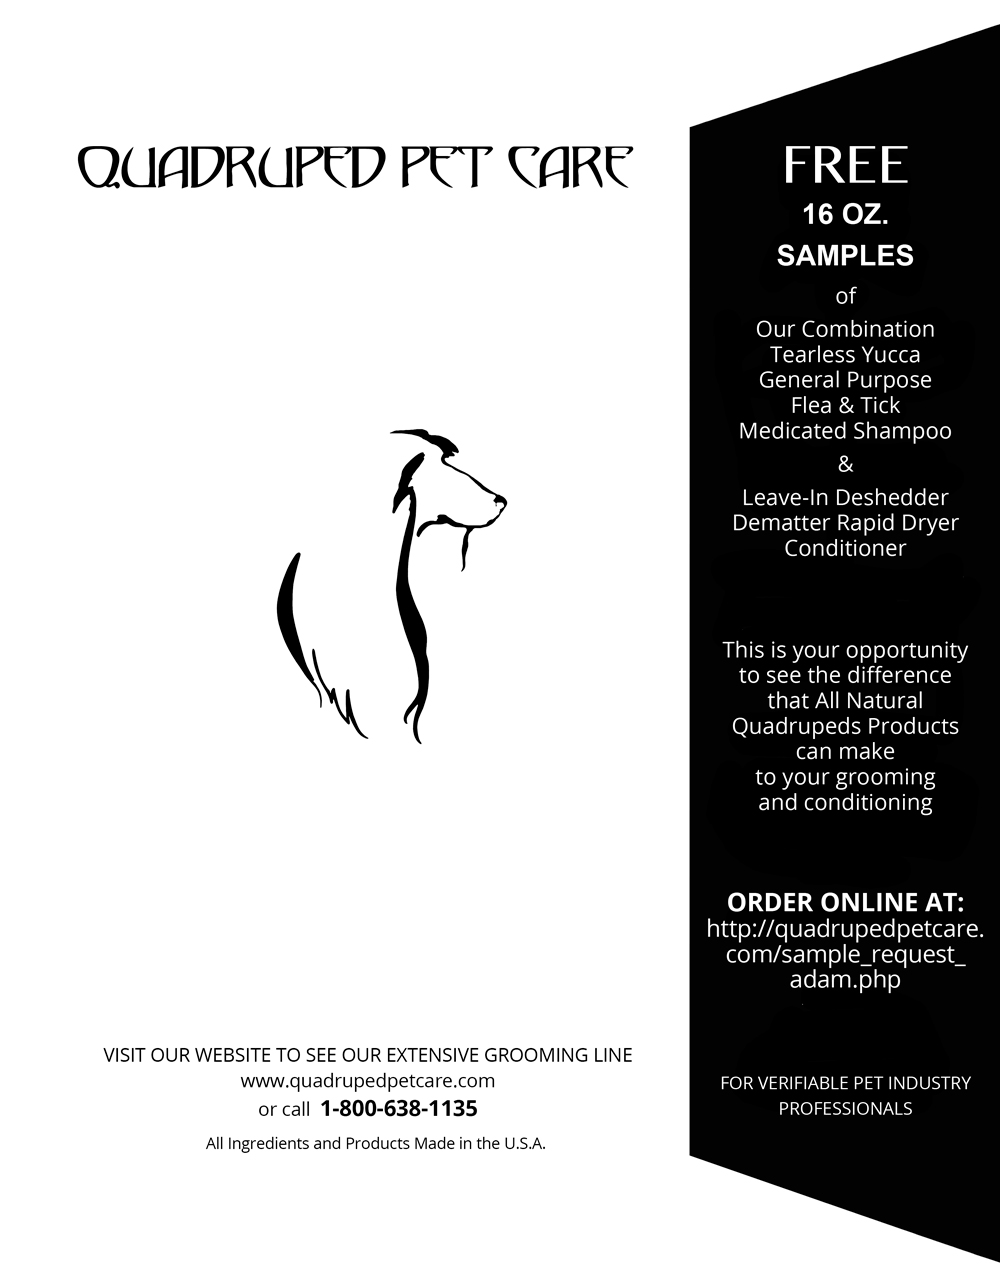 Quadruped Pet Care Advertisement